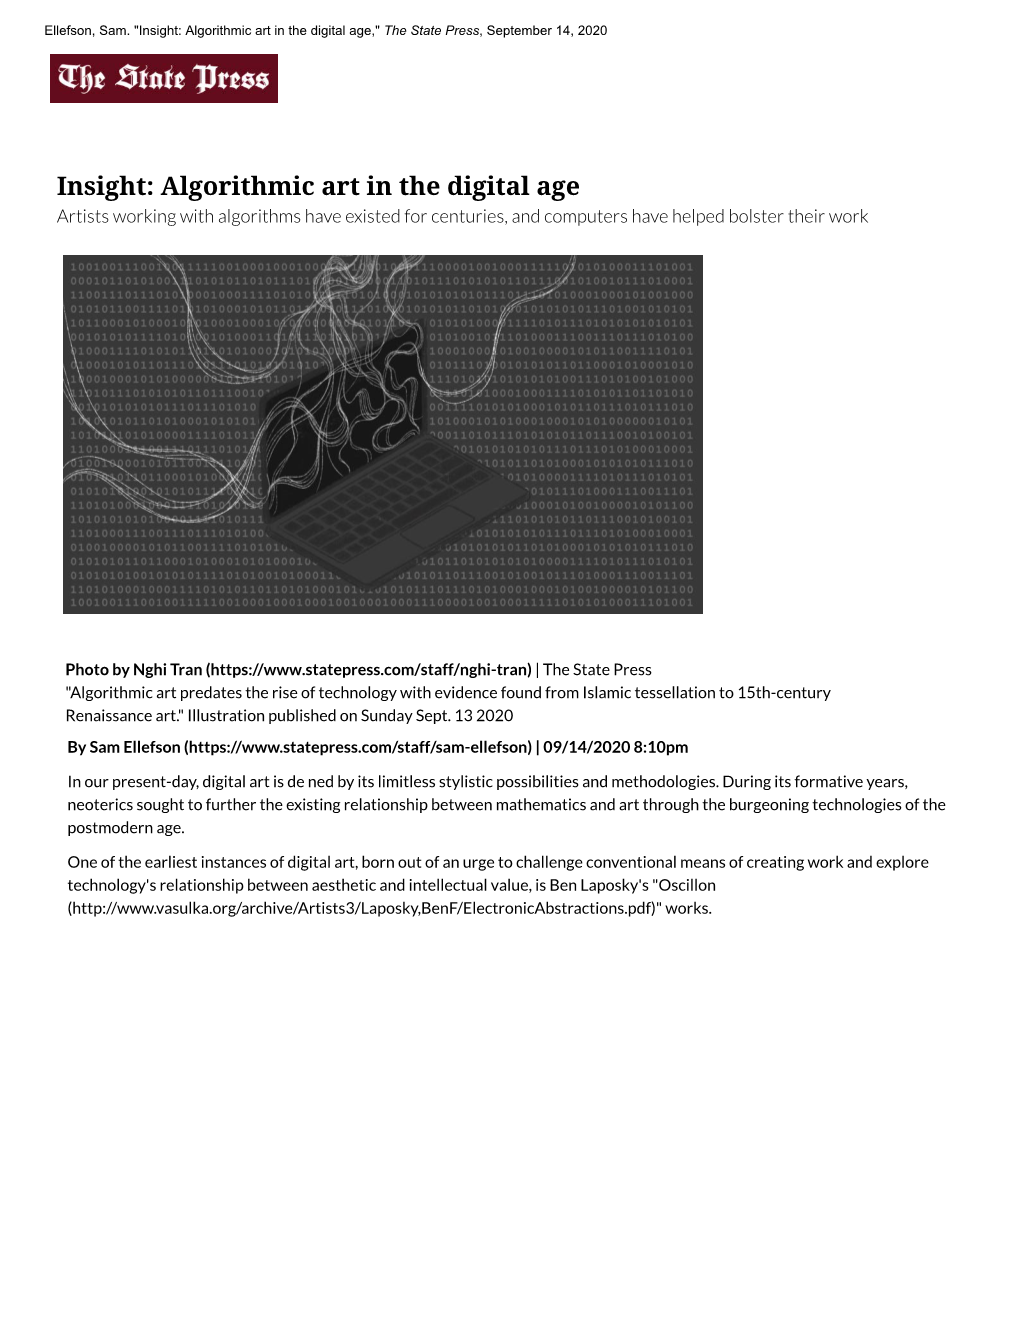 Insight: Algorithmic Art in the Digital Age," the State Press, September 14, 2020